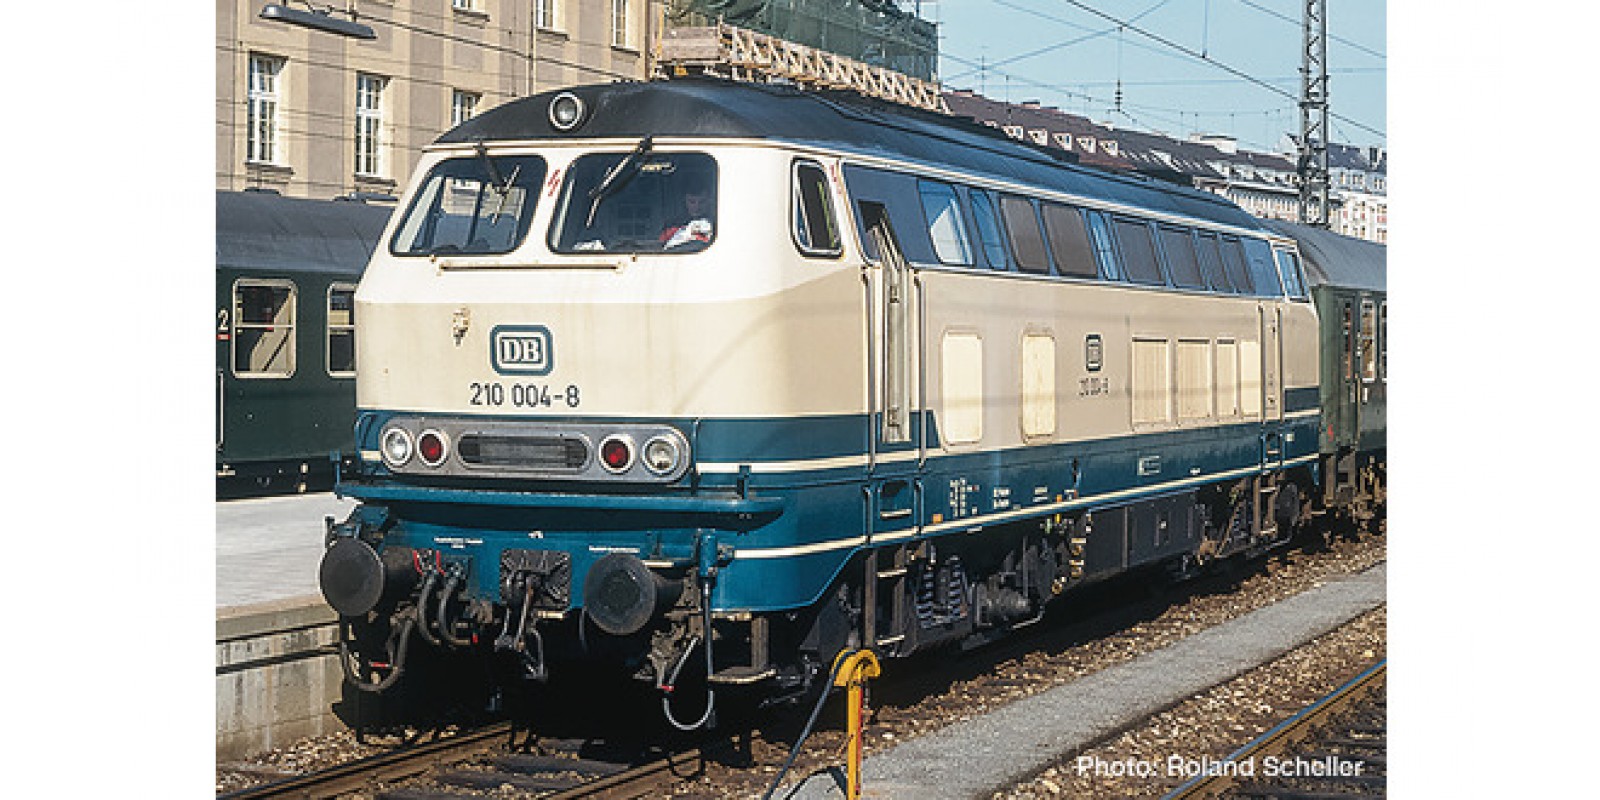 RO79737 - Diesel locomotive 210 004, DB, AC, SOUND